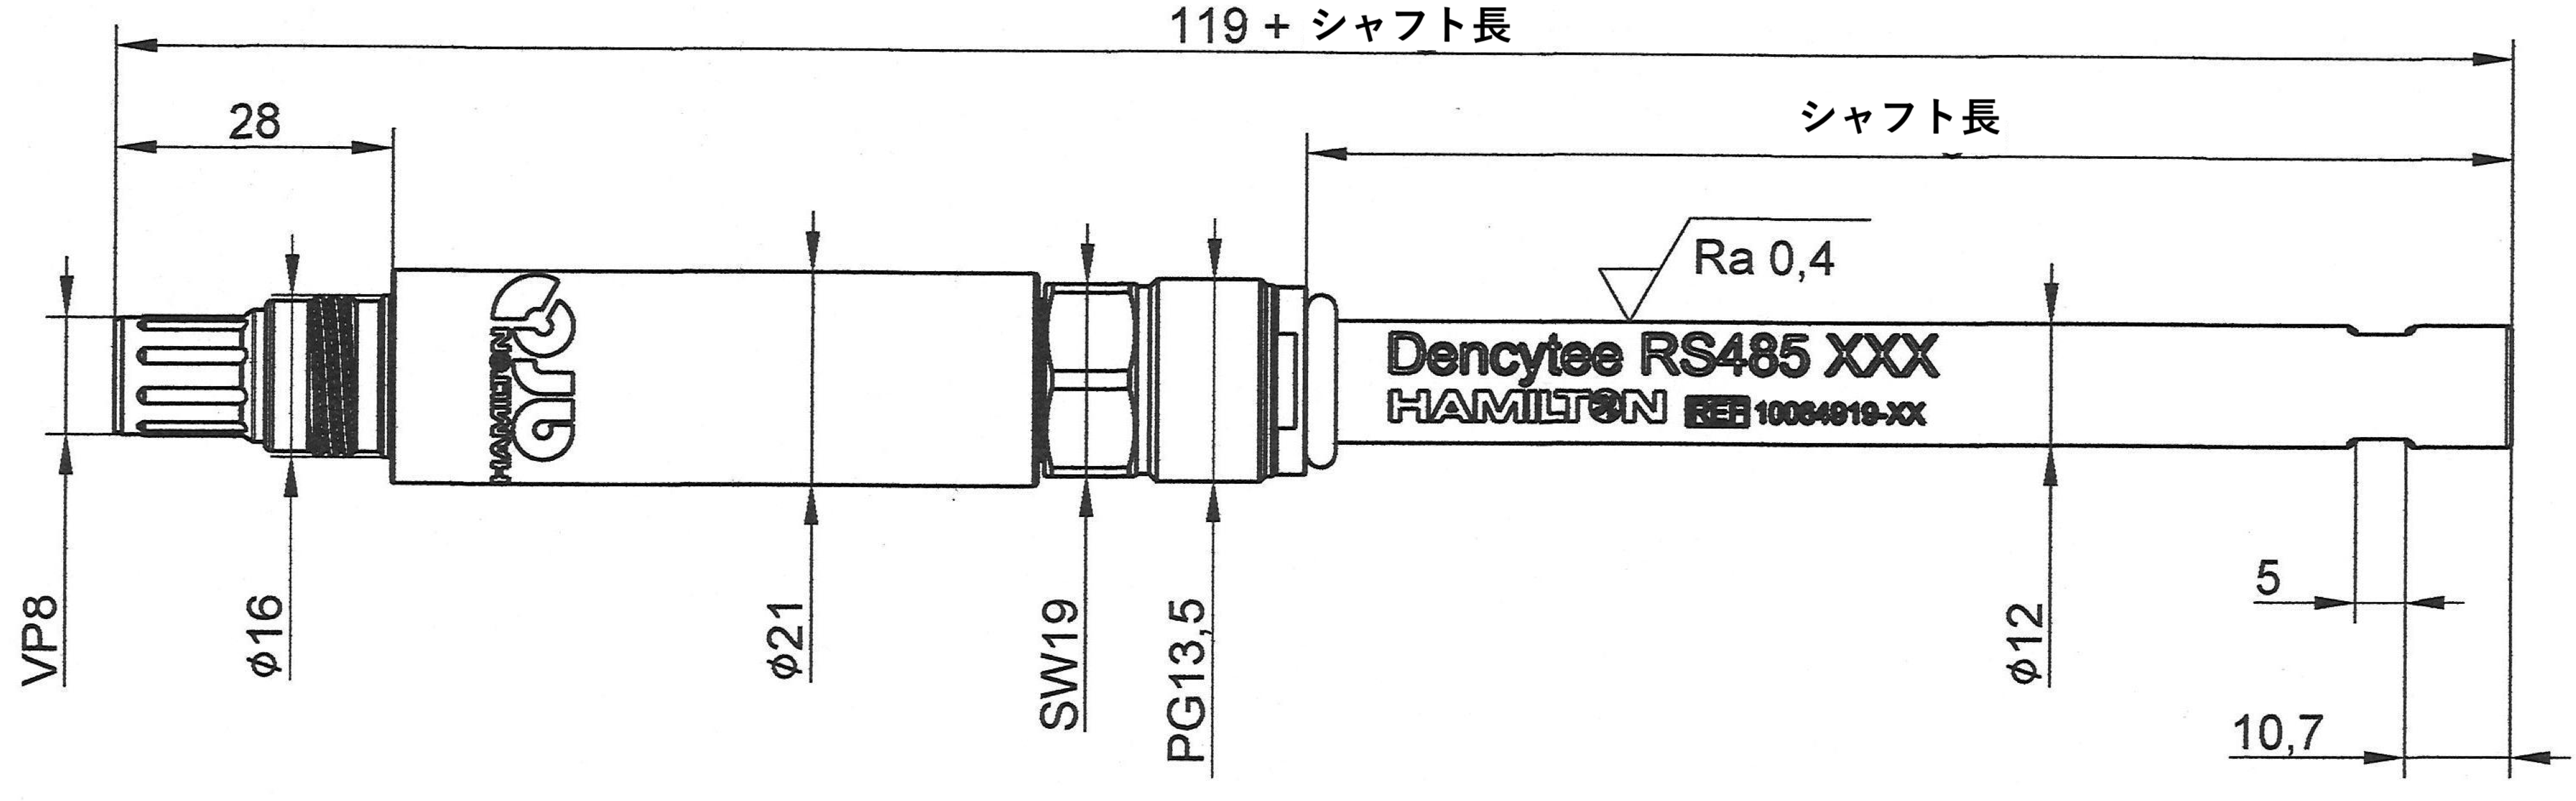 Hamilton Total Cell Density Sensor Dencytee RS485 Drawing